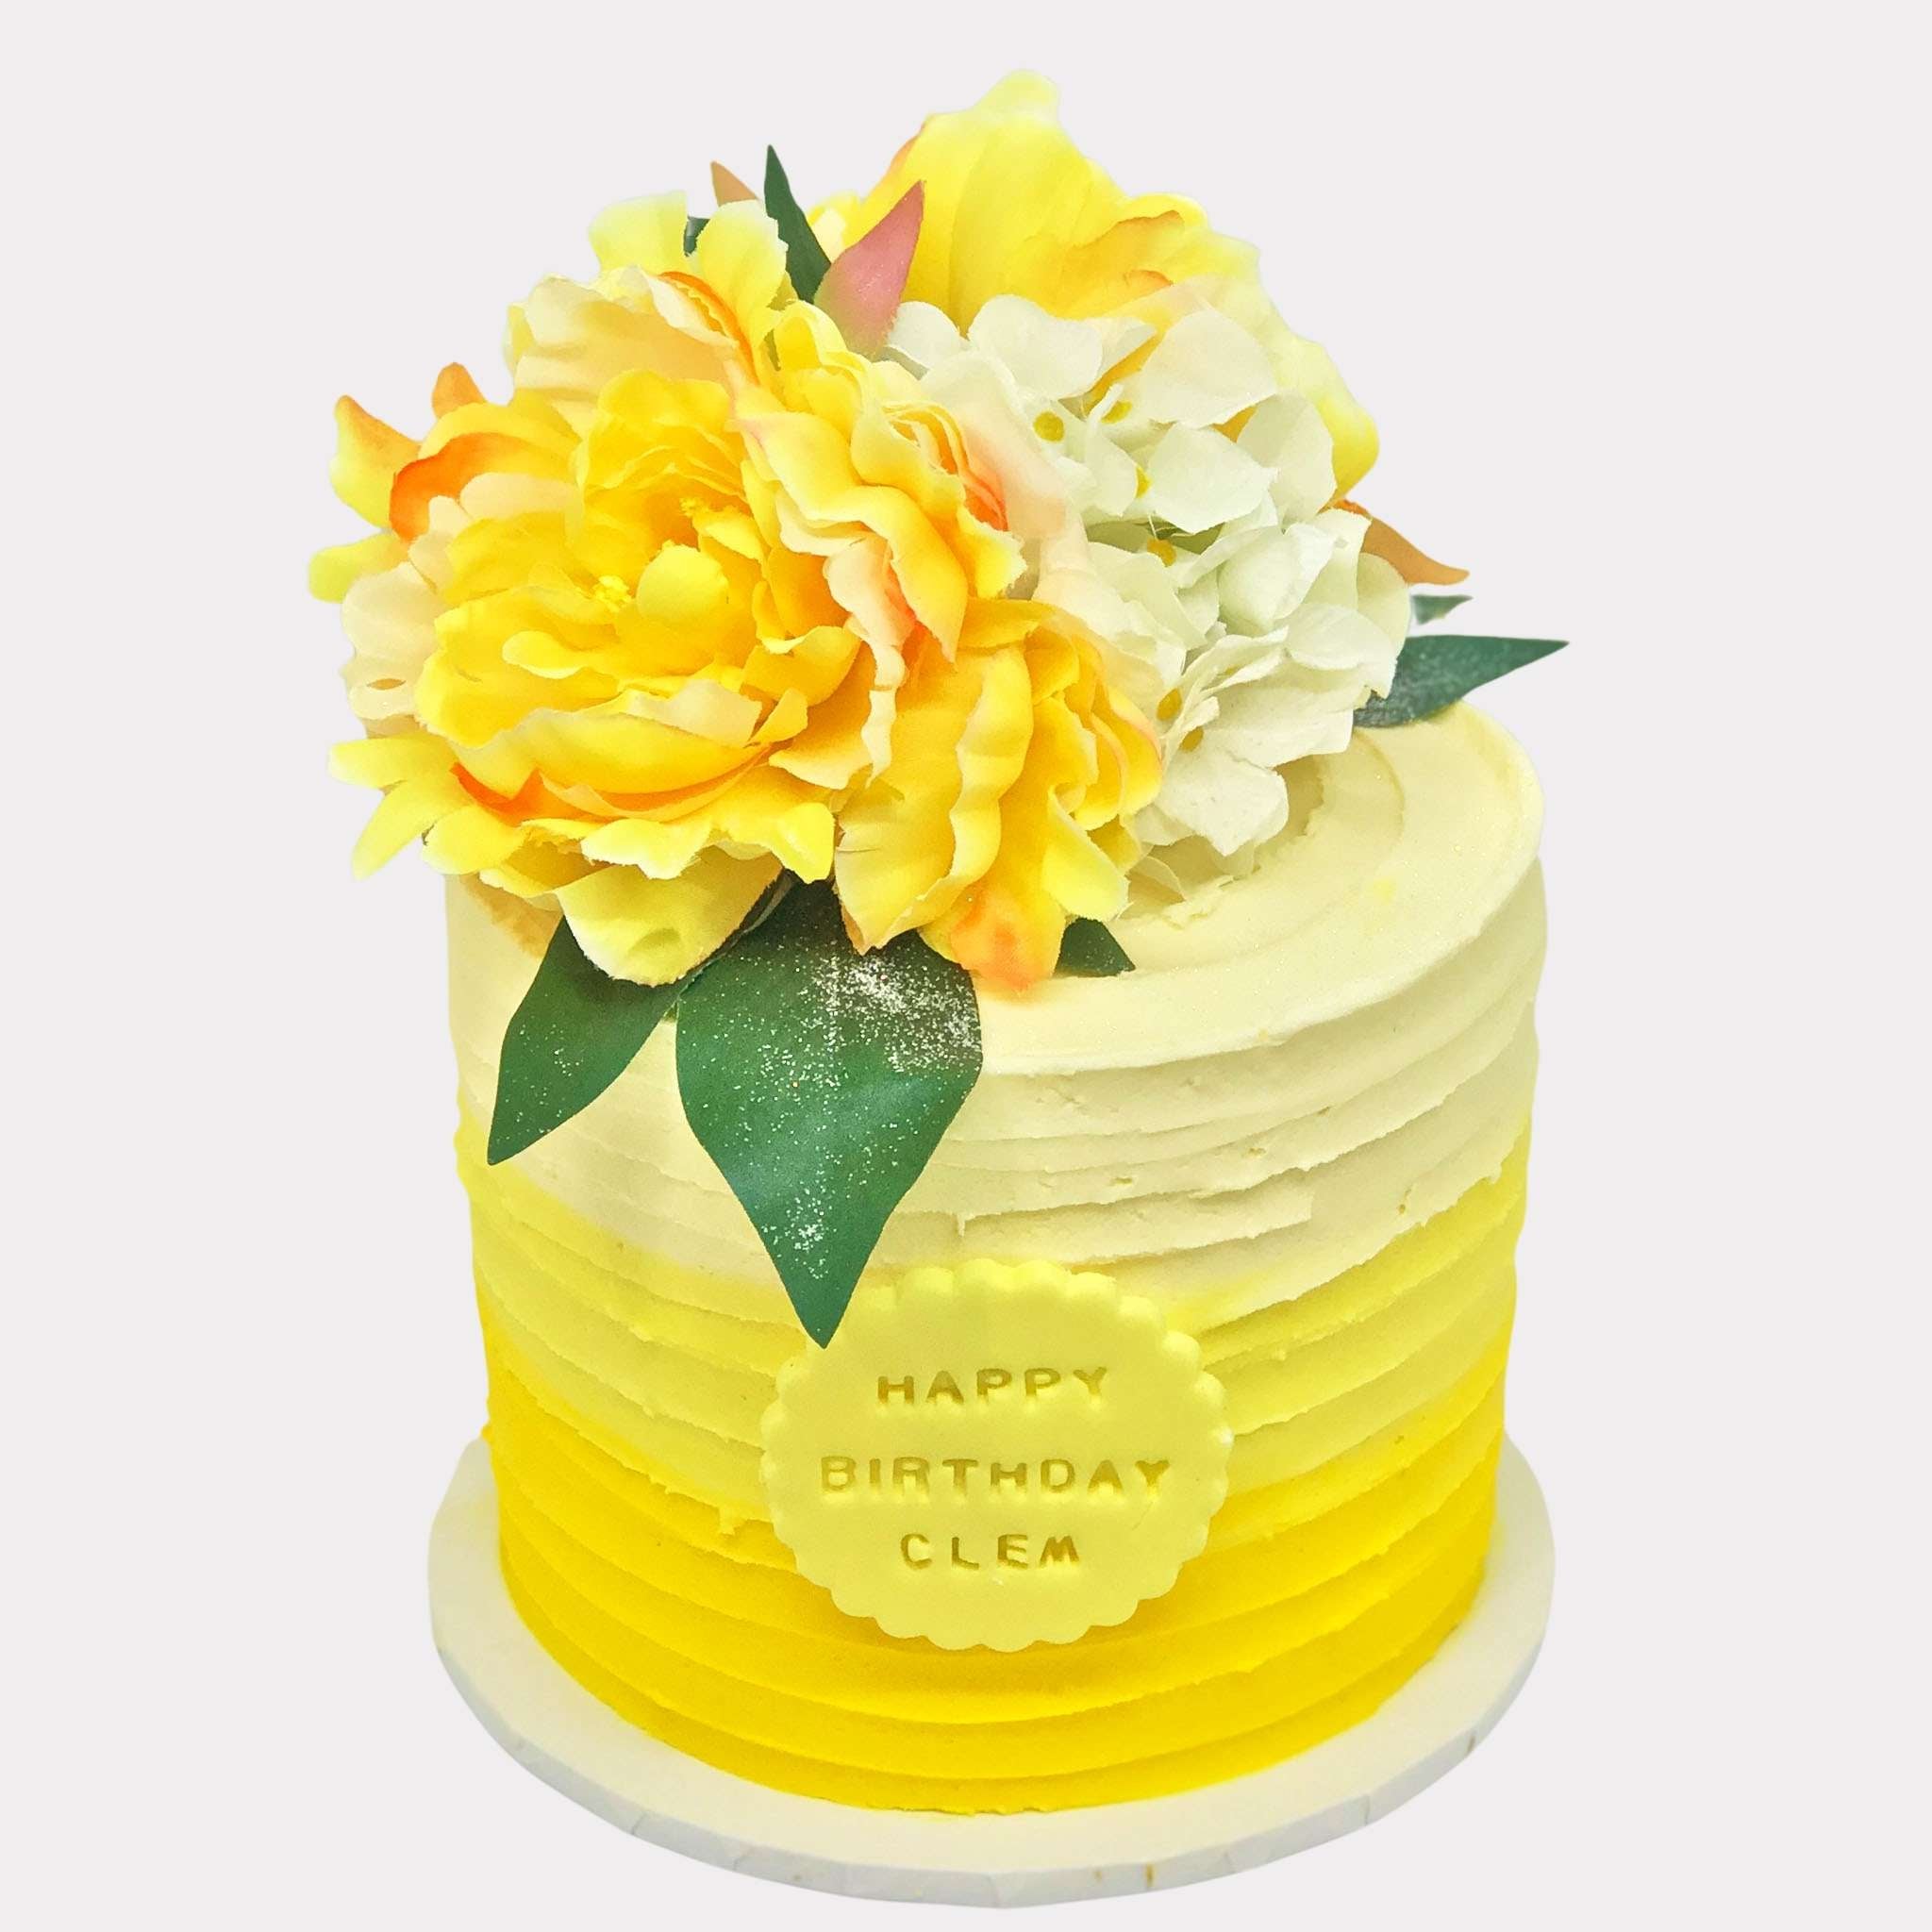 Balloon confetti yellow color theme swirls buttercream birthday cake  #singaporecake #yellowcake #balloonconfetticake #buttercreamcake  #birthdaycake #creamcake #childrencake | The Sensational Cakes